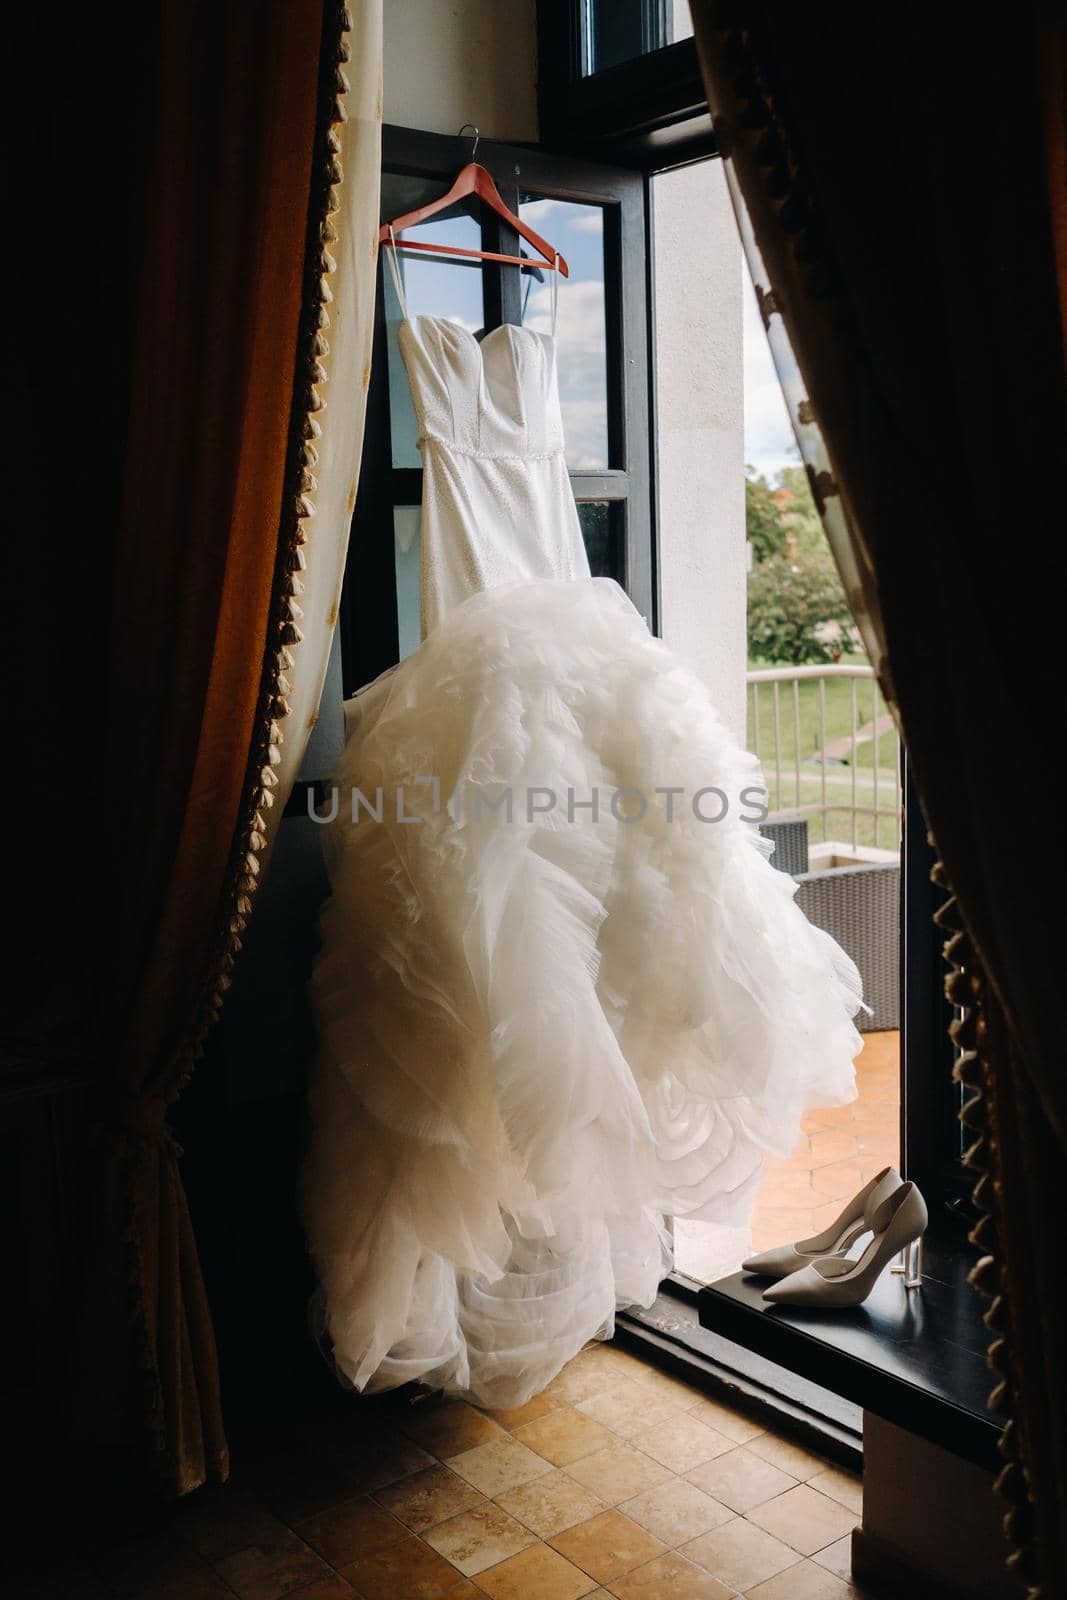 a white wedding dress hangs on a hanger near the window.